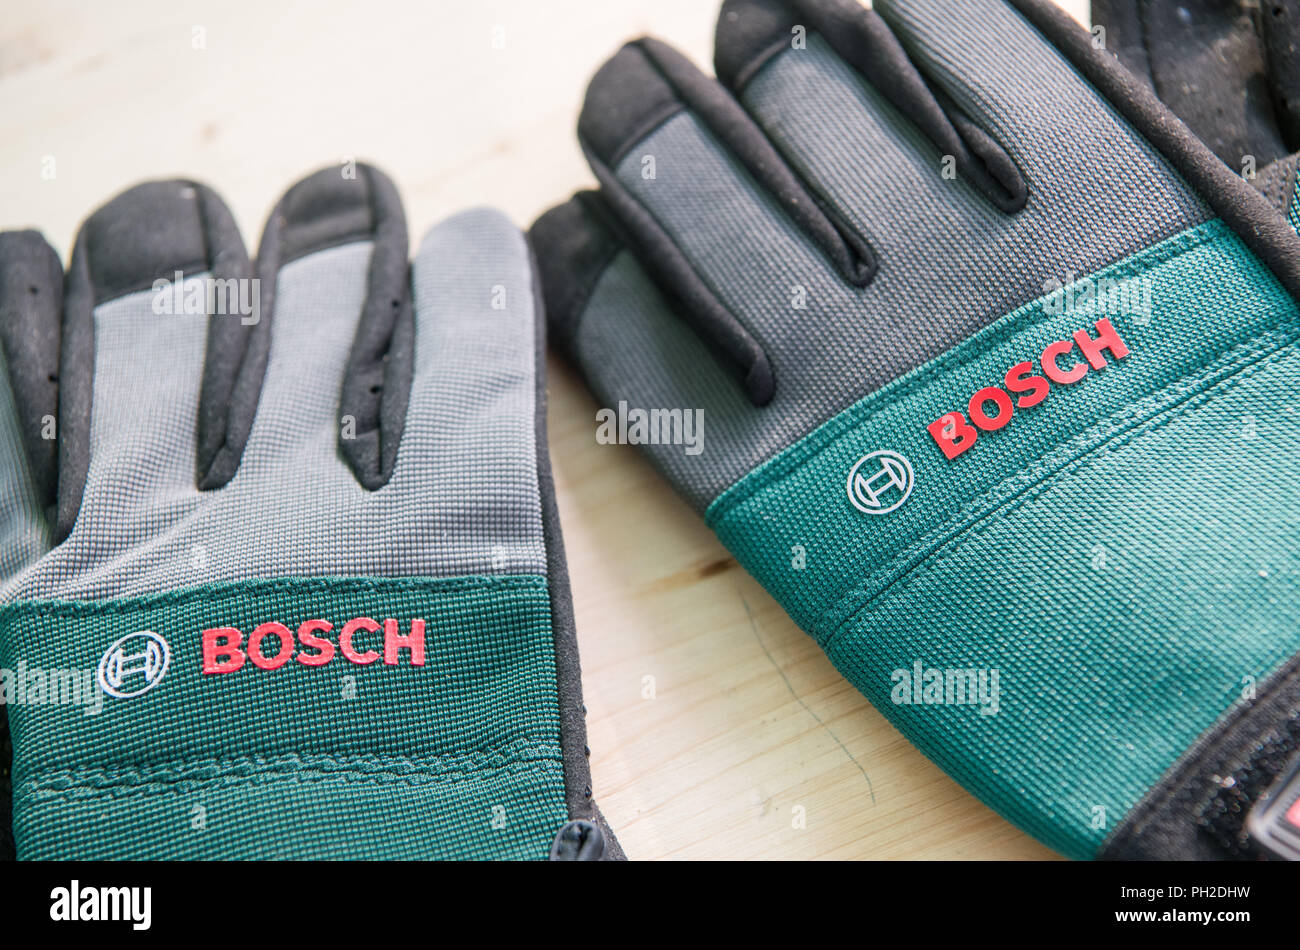 29 August 2018, Stuttgart, Germany: Bosch gardening gloves are on a table.  Photo: Sebastian Gollnow/dpa Stock Photo - Alamy